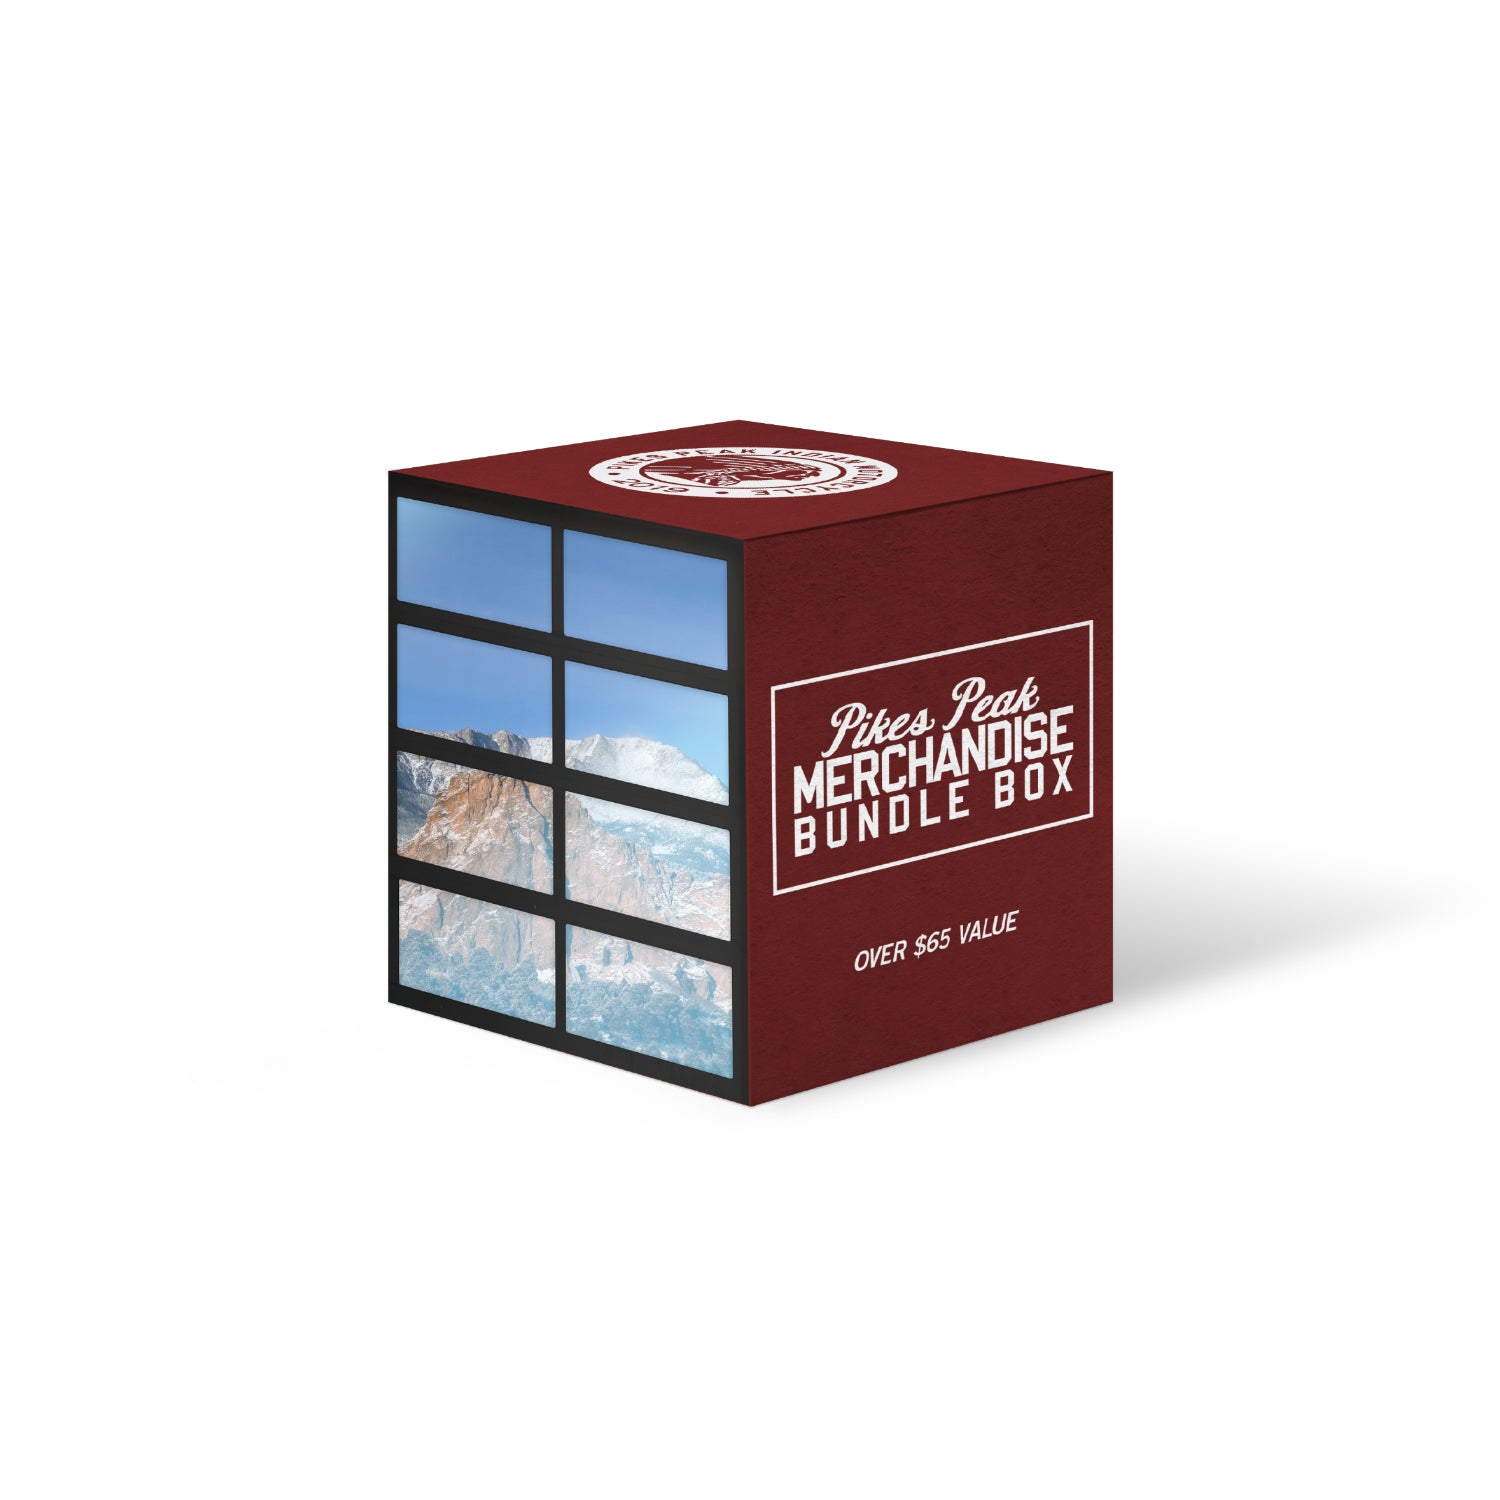 Pikes Peak Merchandise Bundle Box